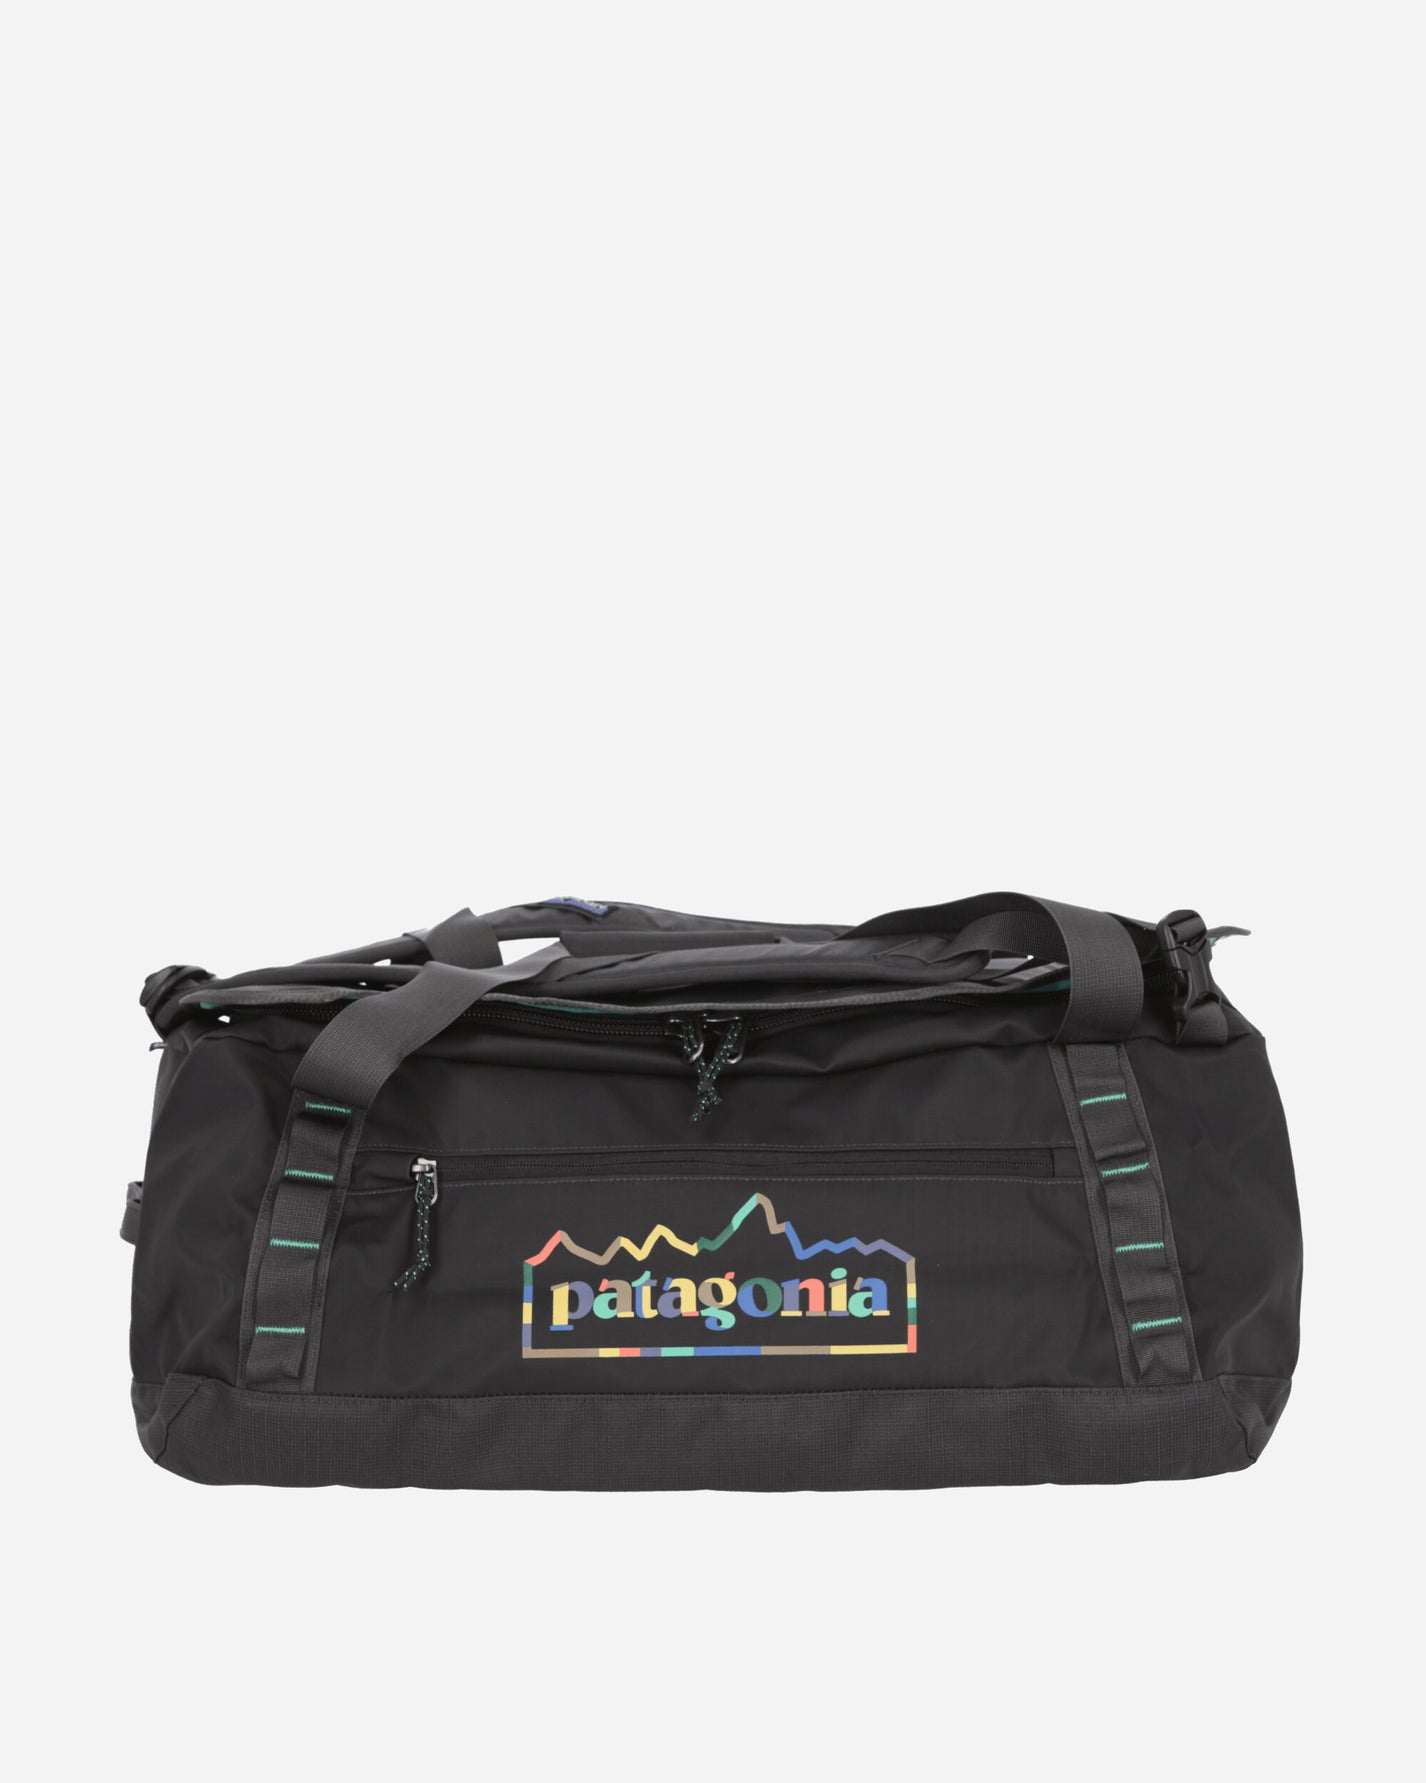 Patagonia Black Hole Duffel 55L Unity Fitz: Ink Black Bags and Backpacks Travel Bags 49343 UFIB